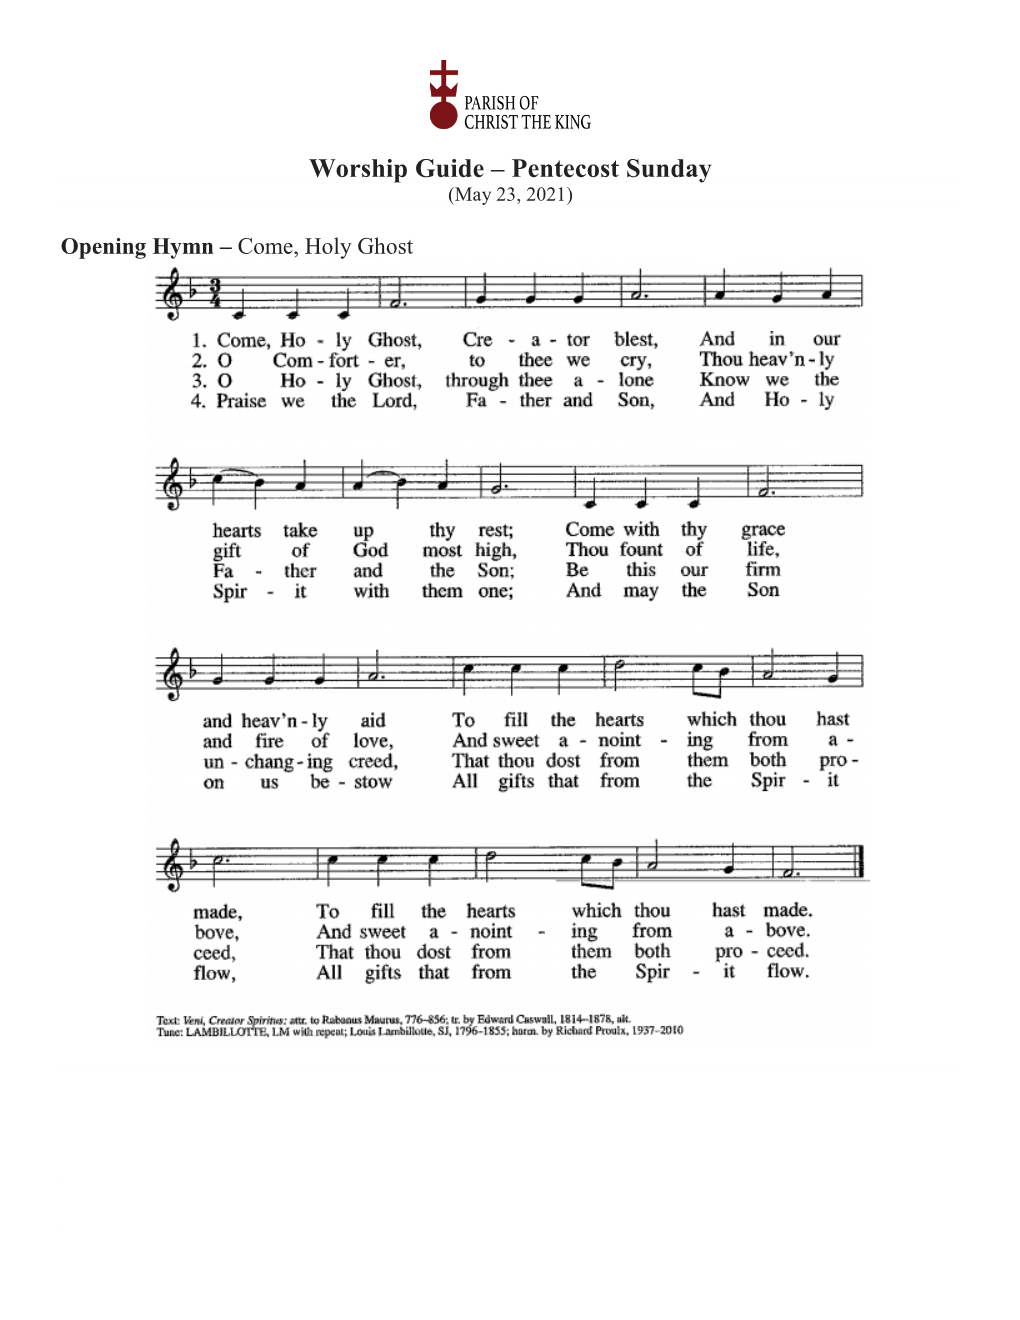 Worship Guide – Pentecost Sunday (May 23, 2021)